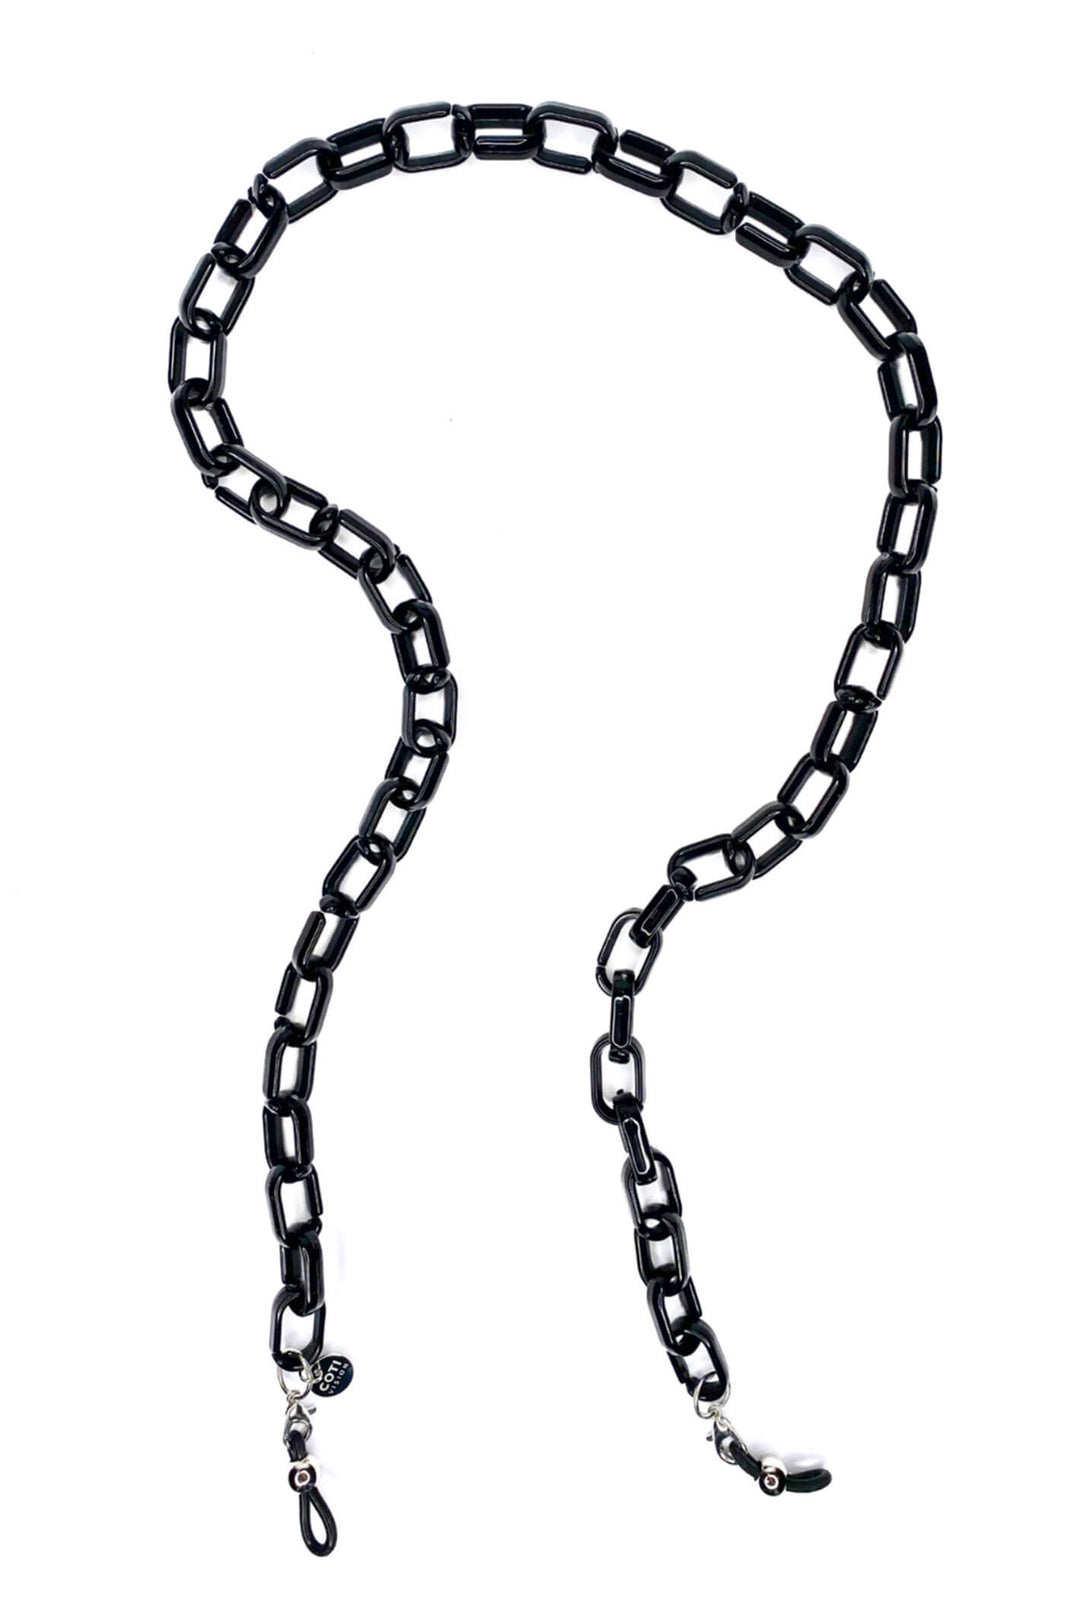 Coti Filey Midnight Black Glasses Chain - Olivia Grace Fashion